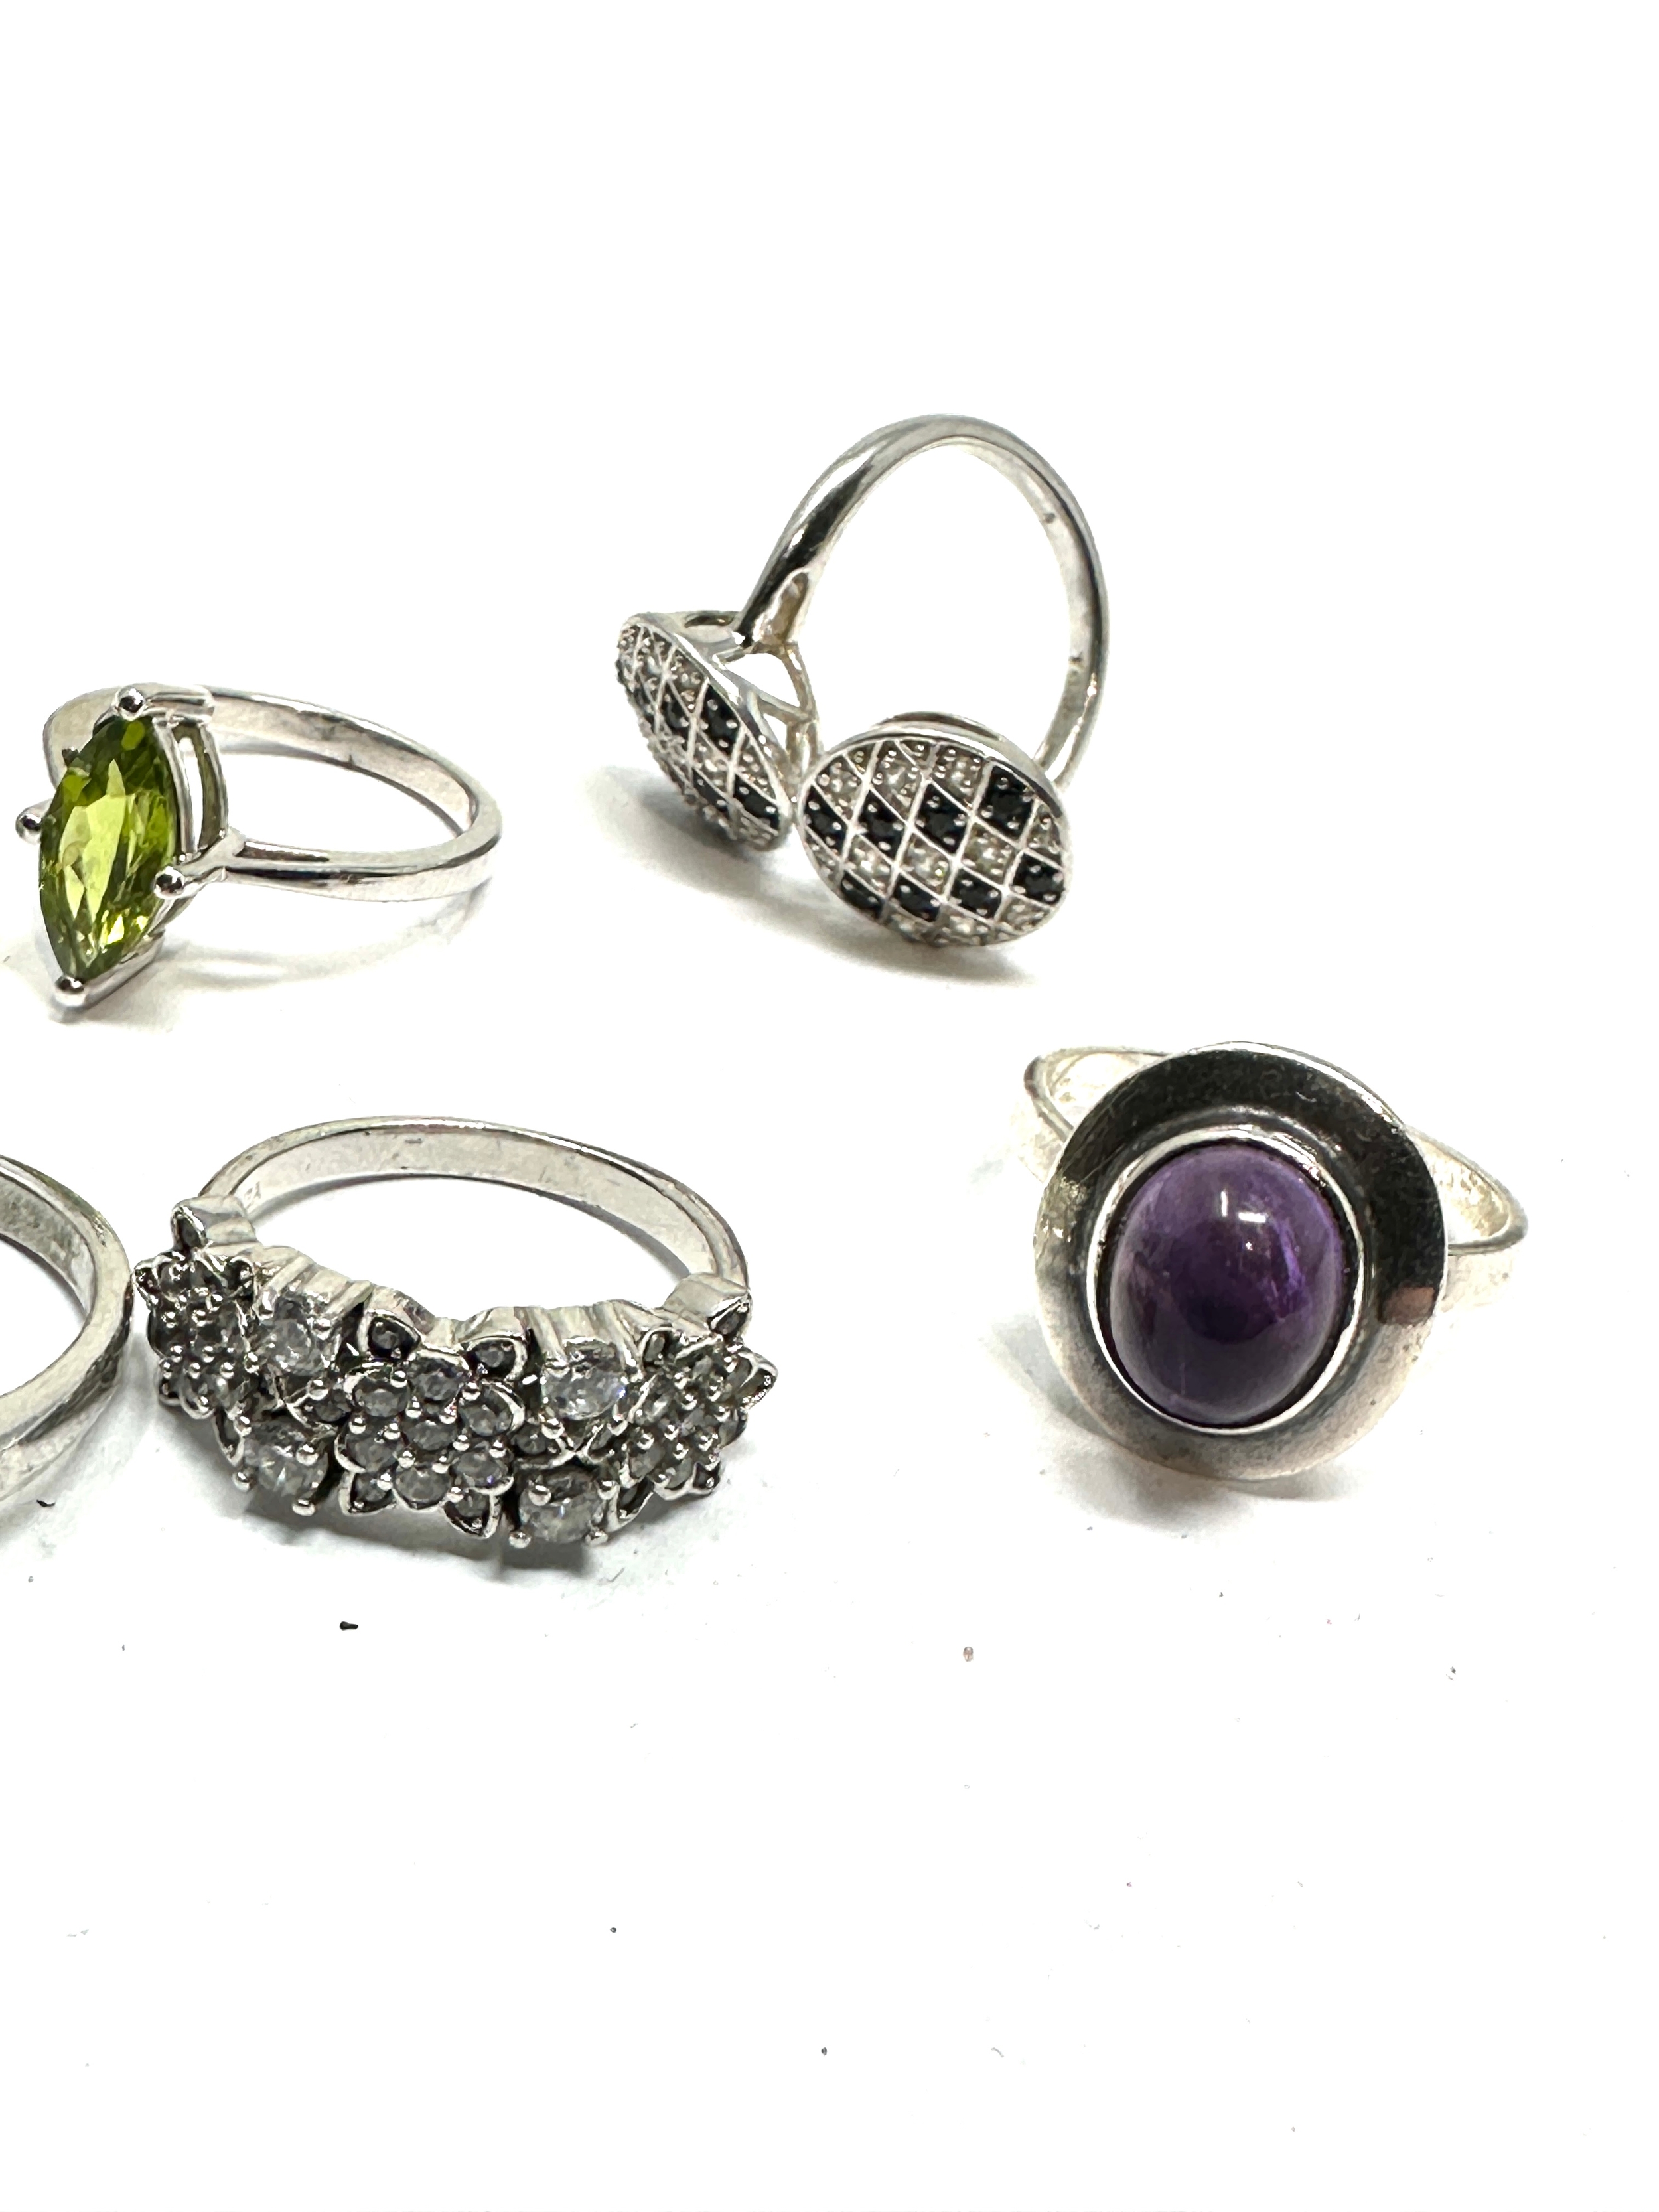 6 silver gemstone set rings - Image 3 of 3